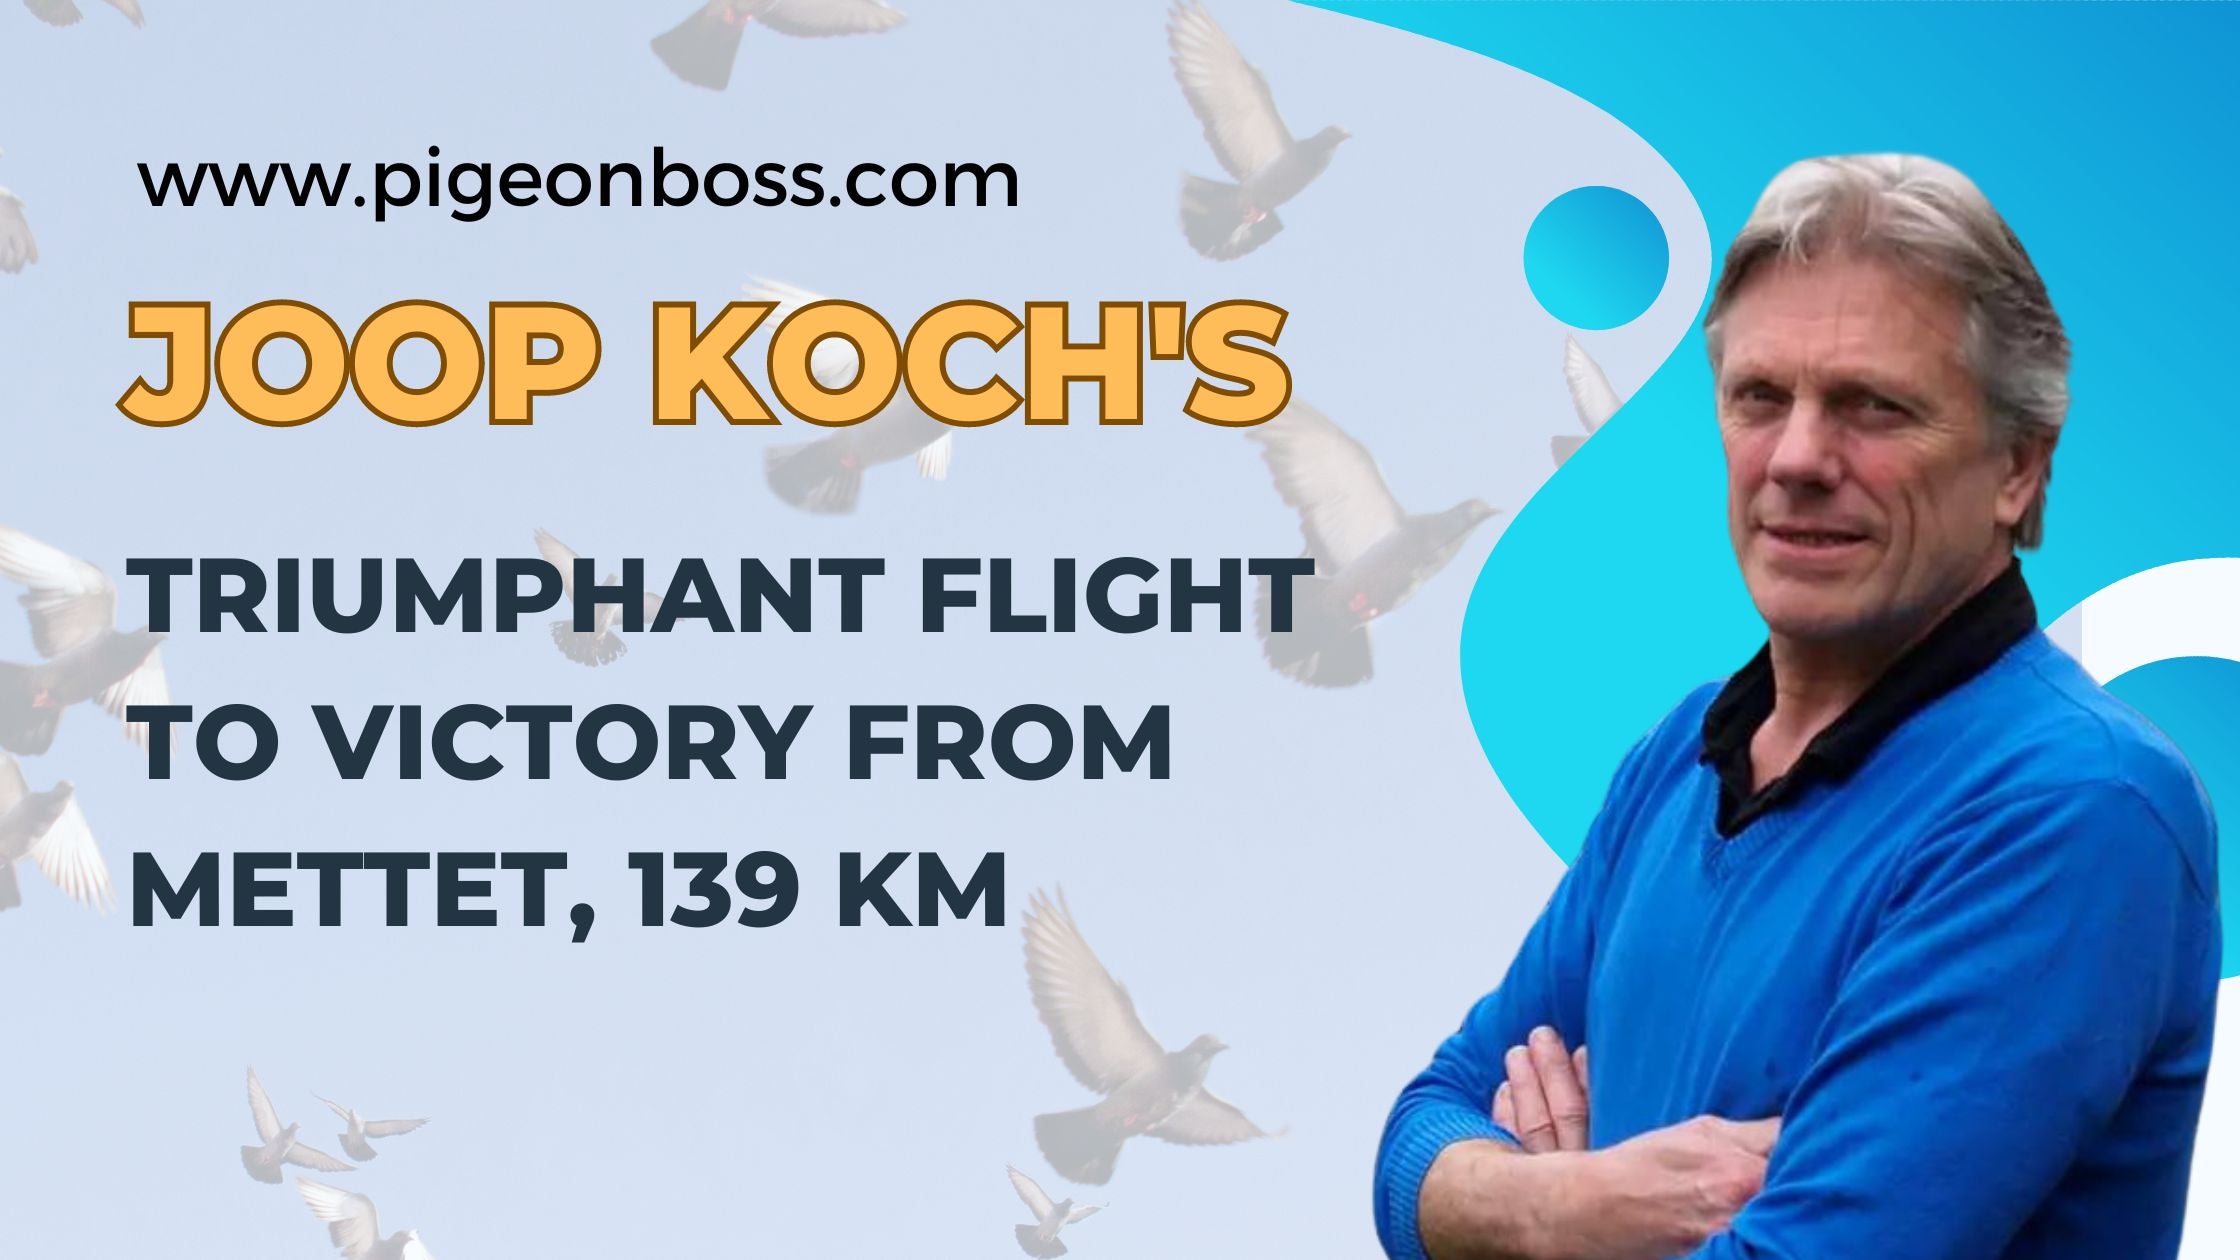 Joop Koch's Triumphant Flight to Victory From Mettet, 139 KM